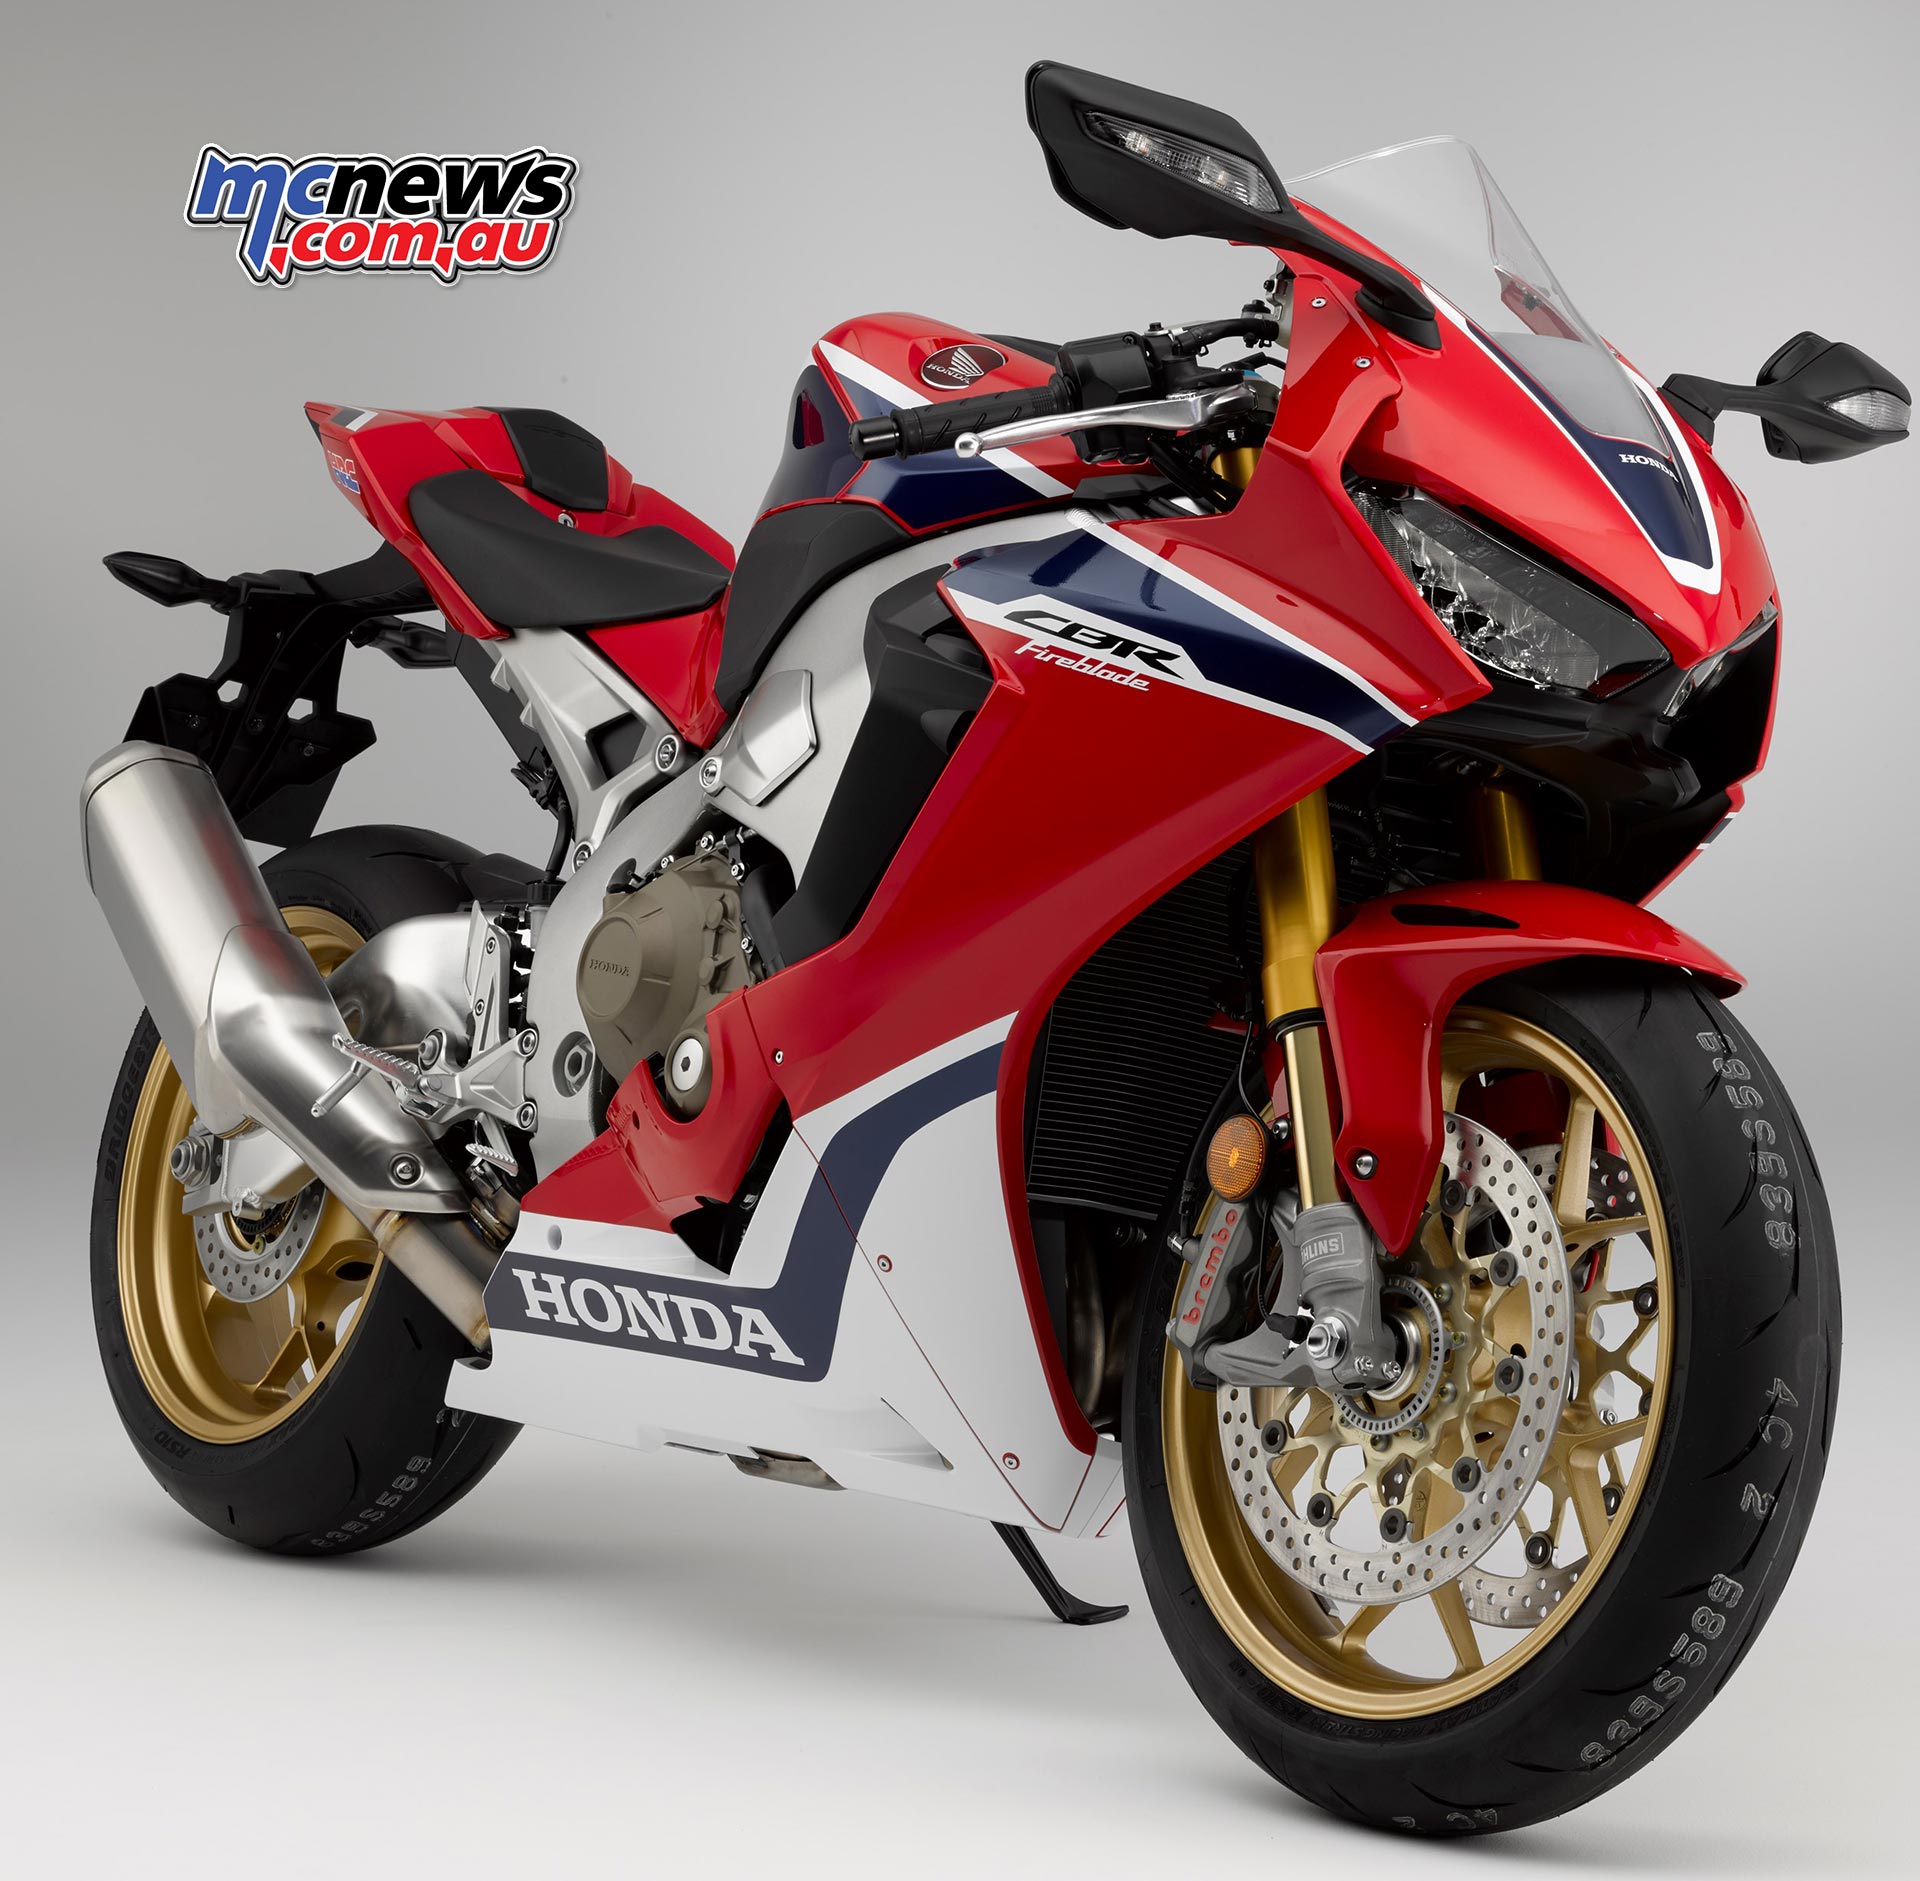 17 Honda Cbr1000rr Fireblade Sp Motorcycle News Sport And Reviews